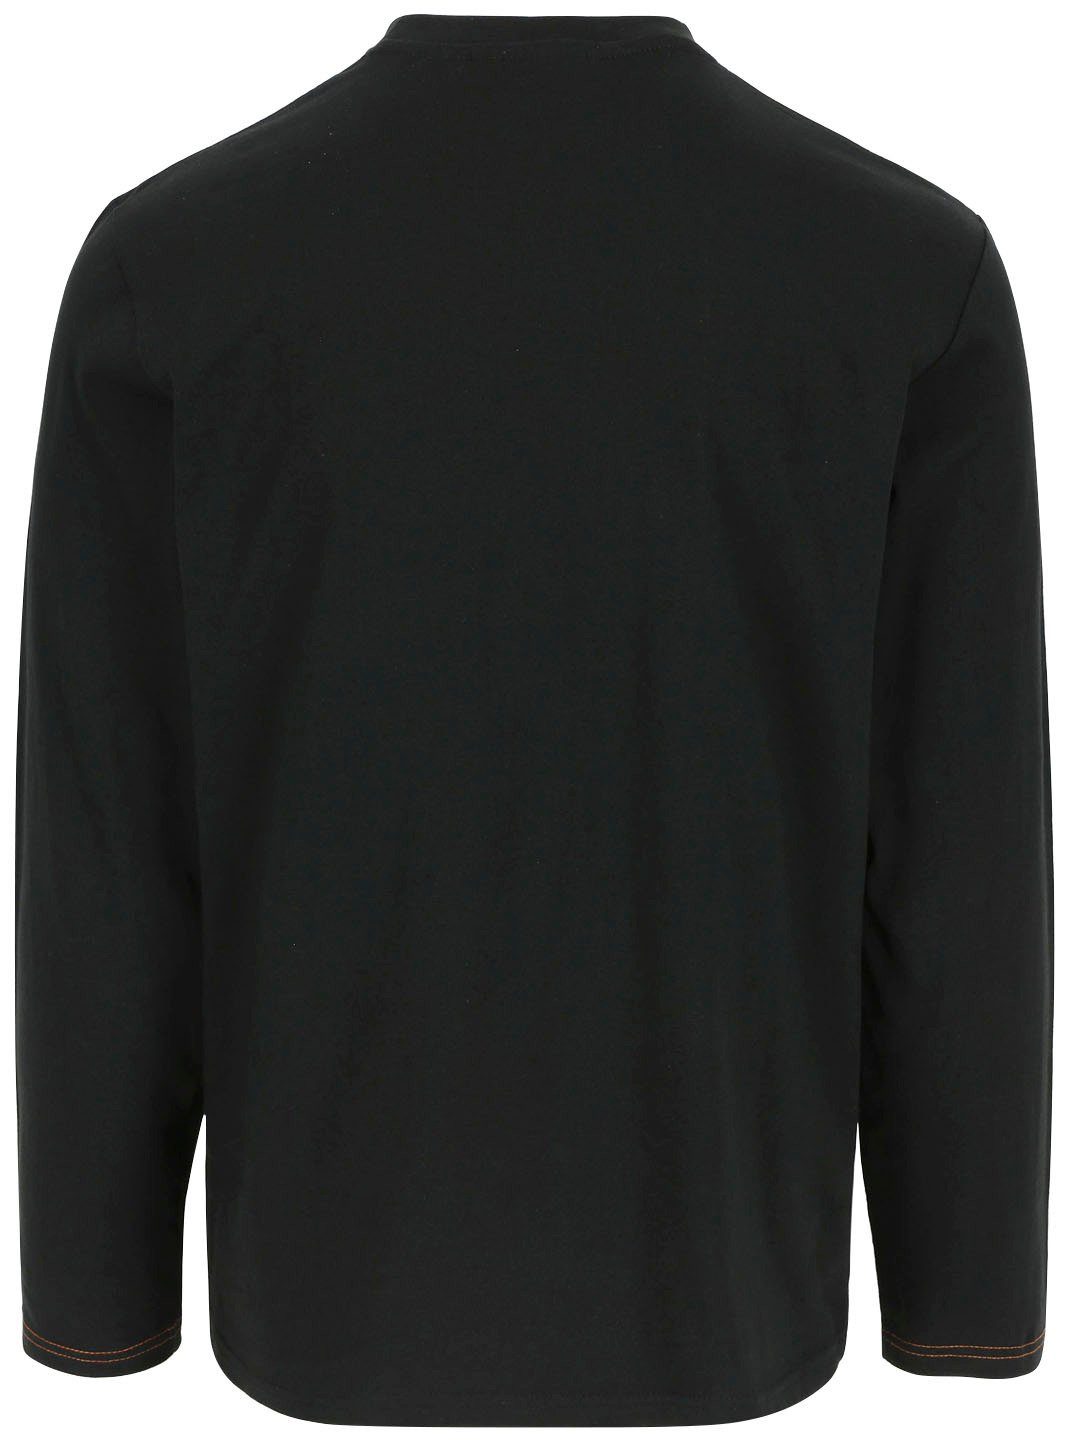 langärmlig Tragegefühl, vorgeschrumpfte Noet Herock Basic schwarz angenehmes Langarmshirt Baumwolle, t-shirt % 100